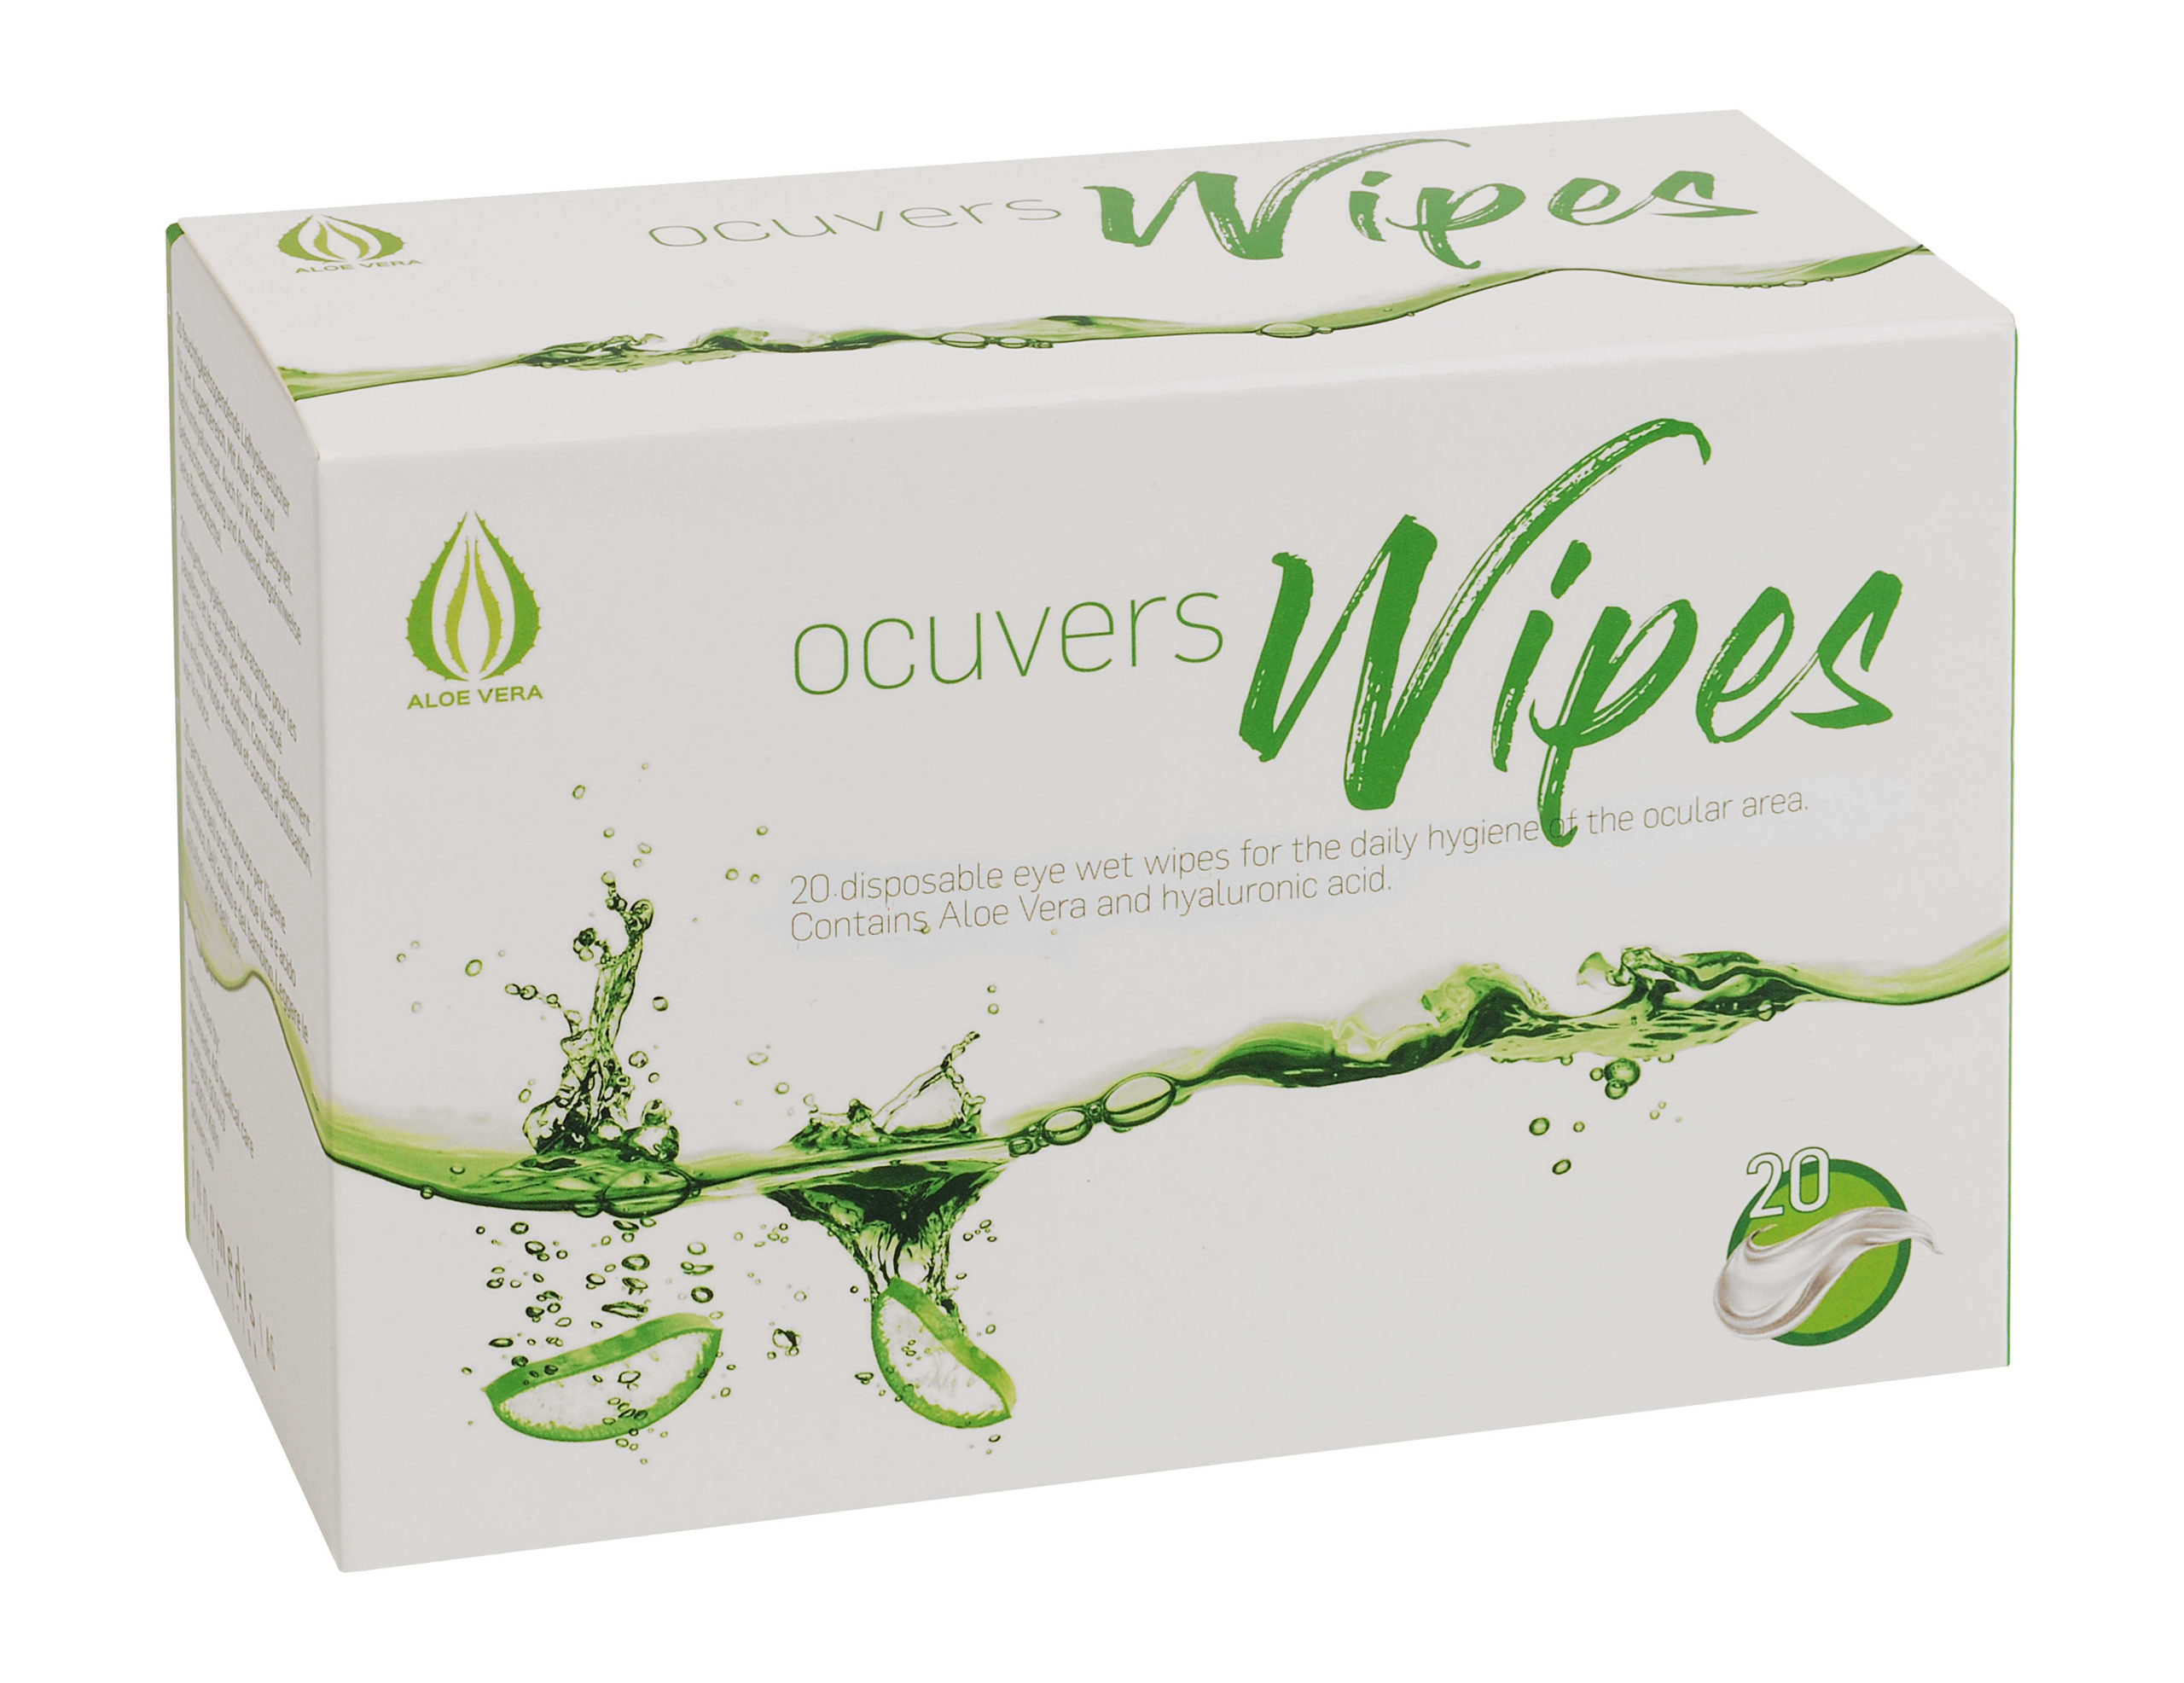 Ocuvers-Wipes